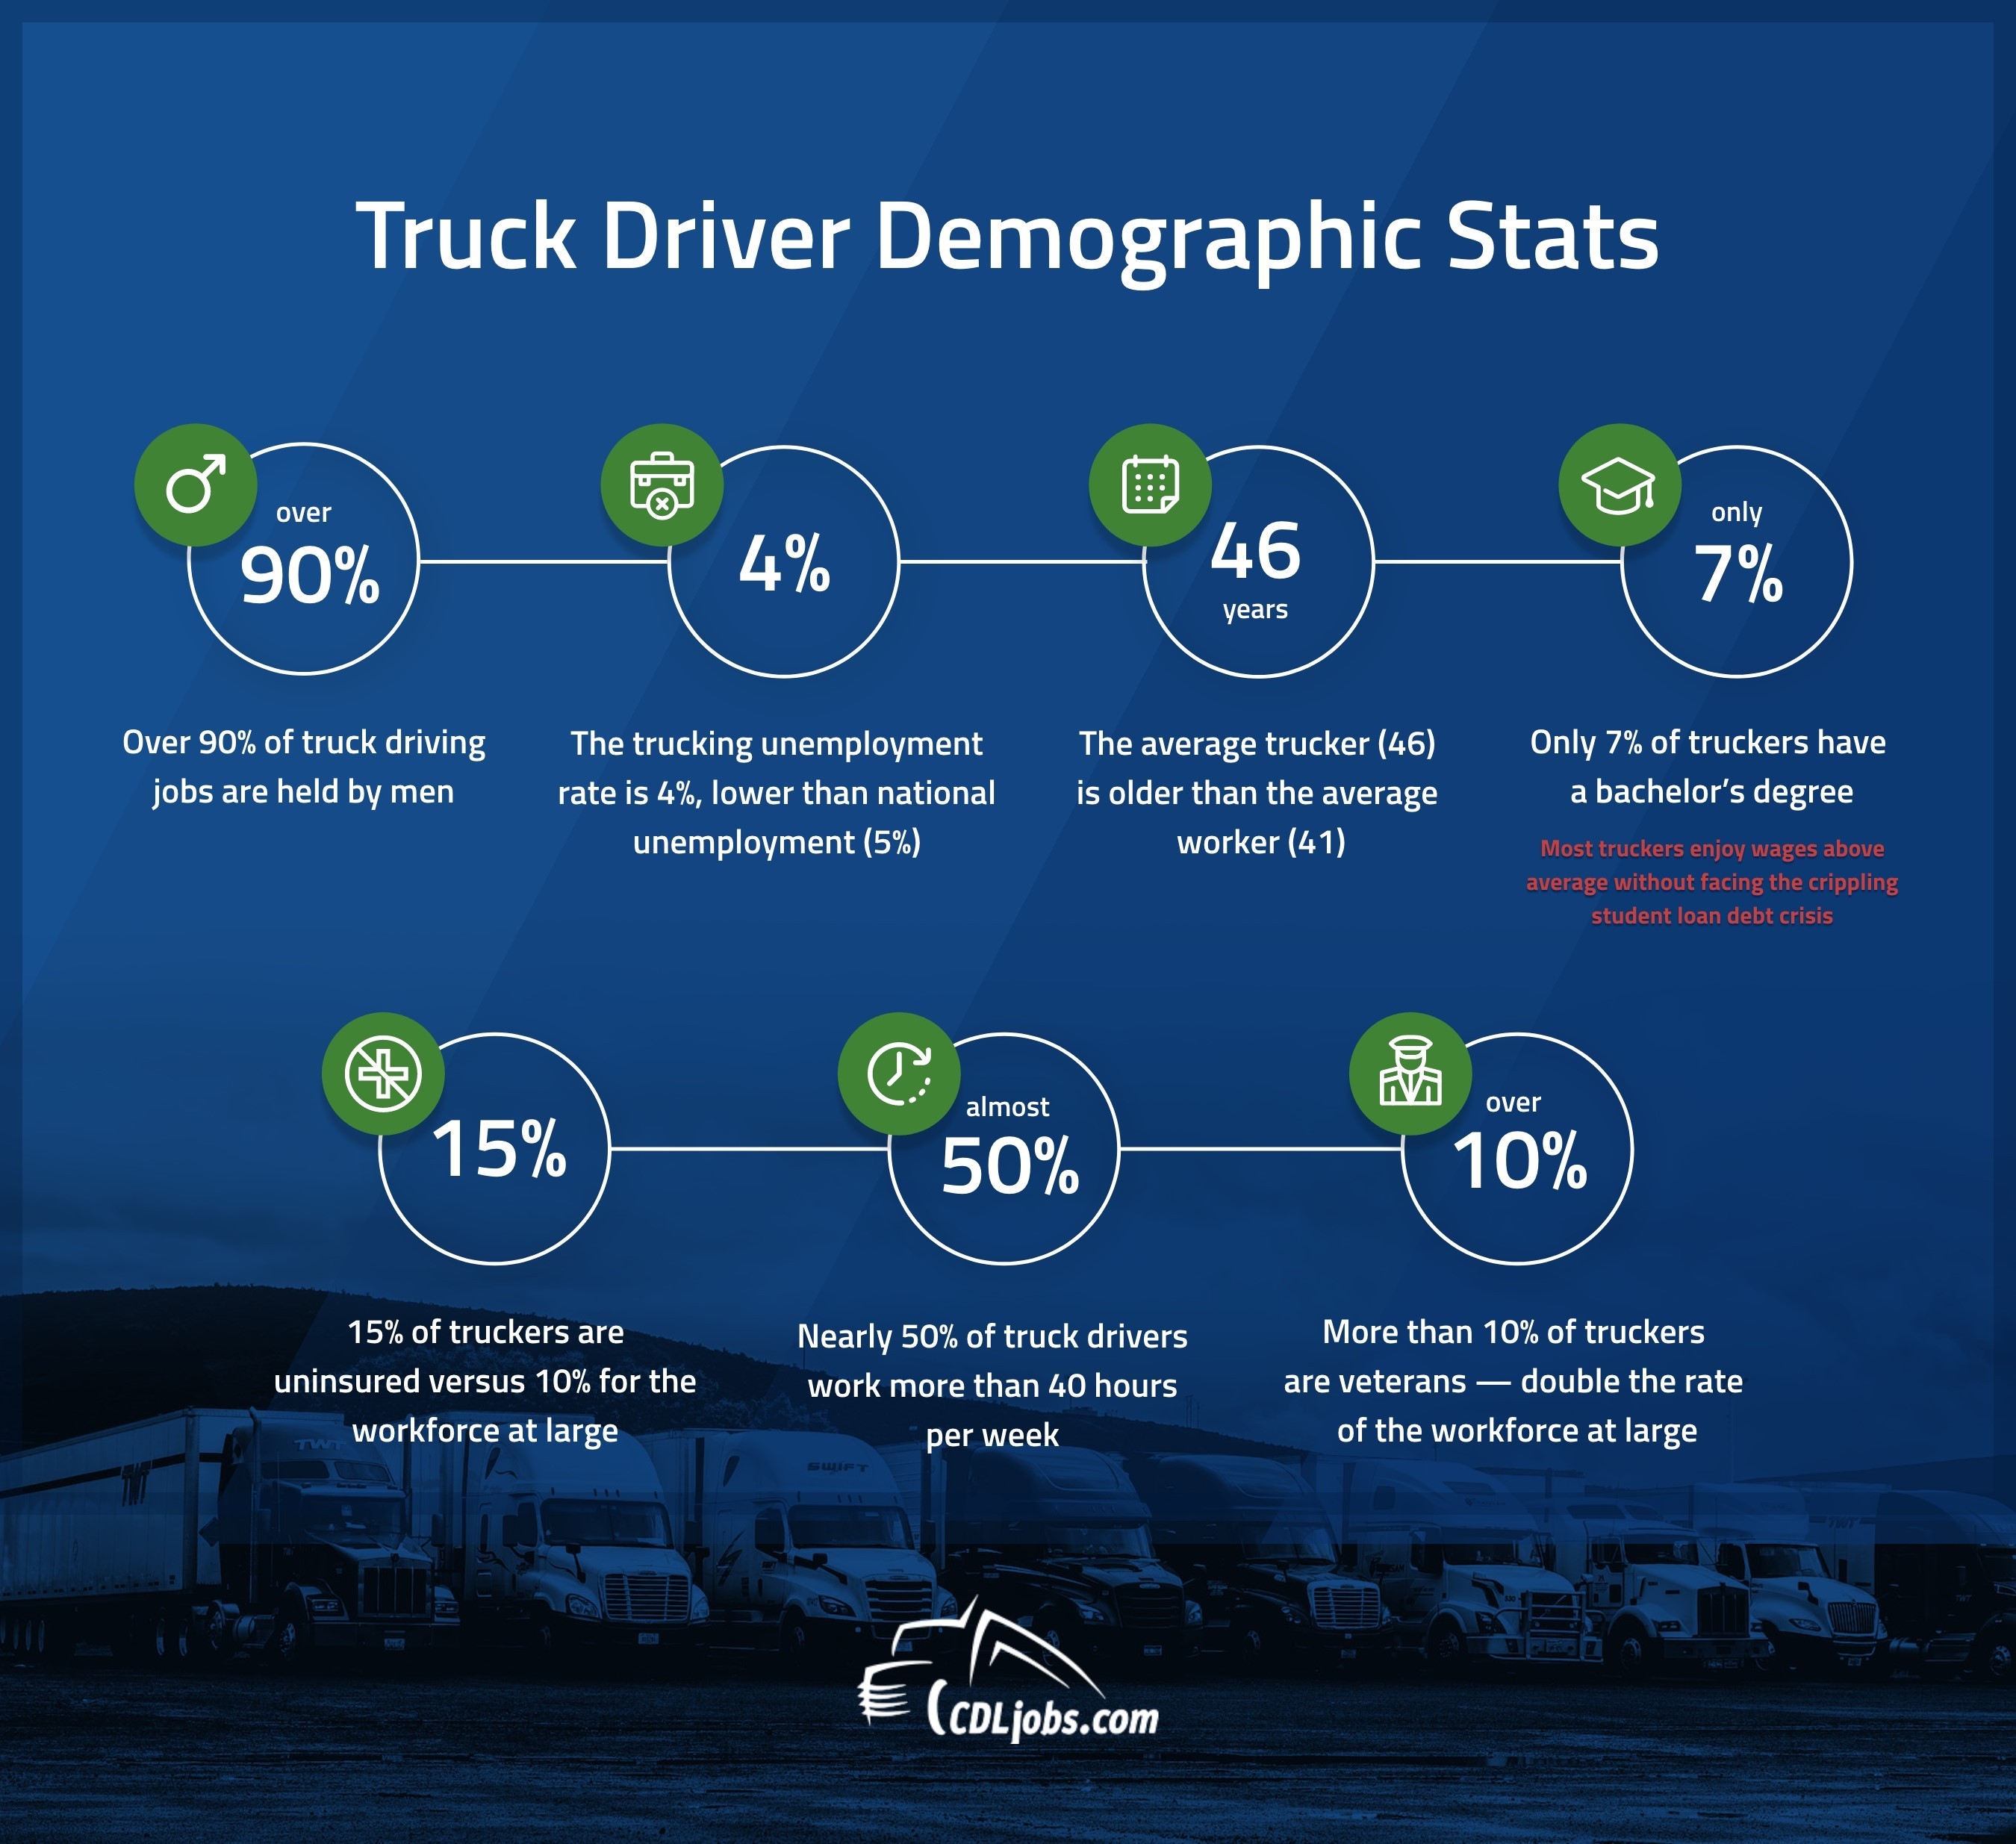 truck driver demographics infographic